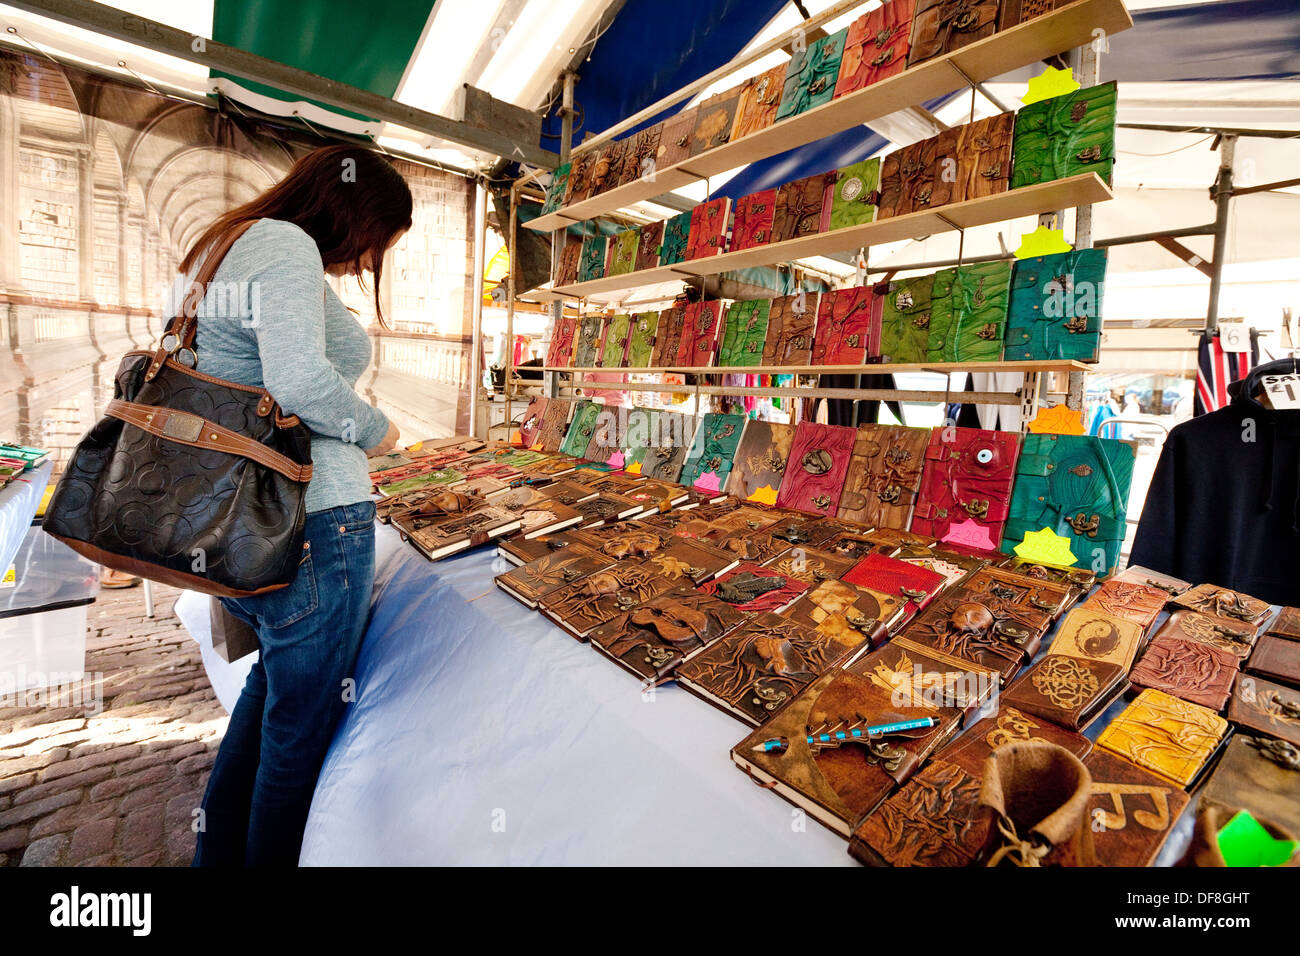 A woman shopping at a craft market stall, buying books, Cambridge market, Cambridge, UK Stock Photo